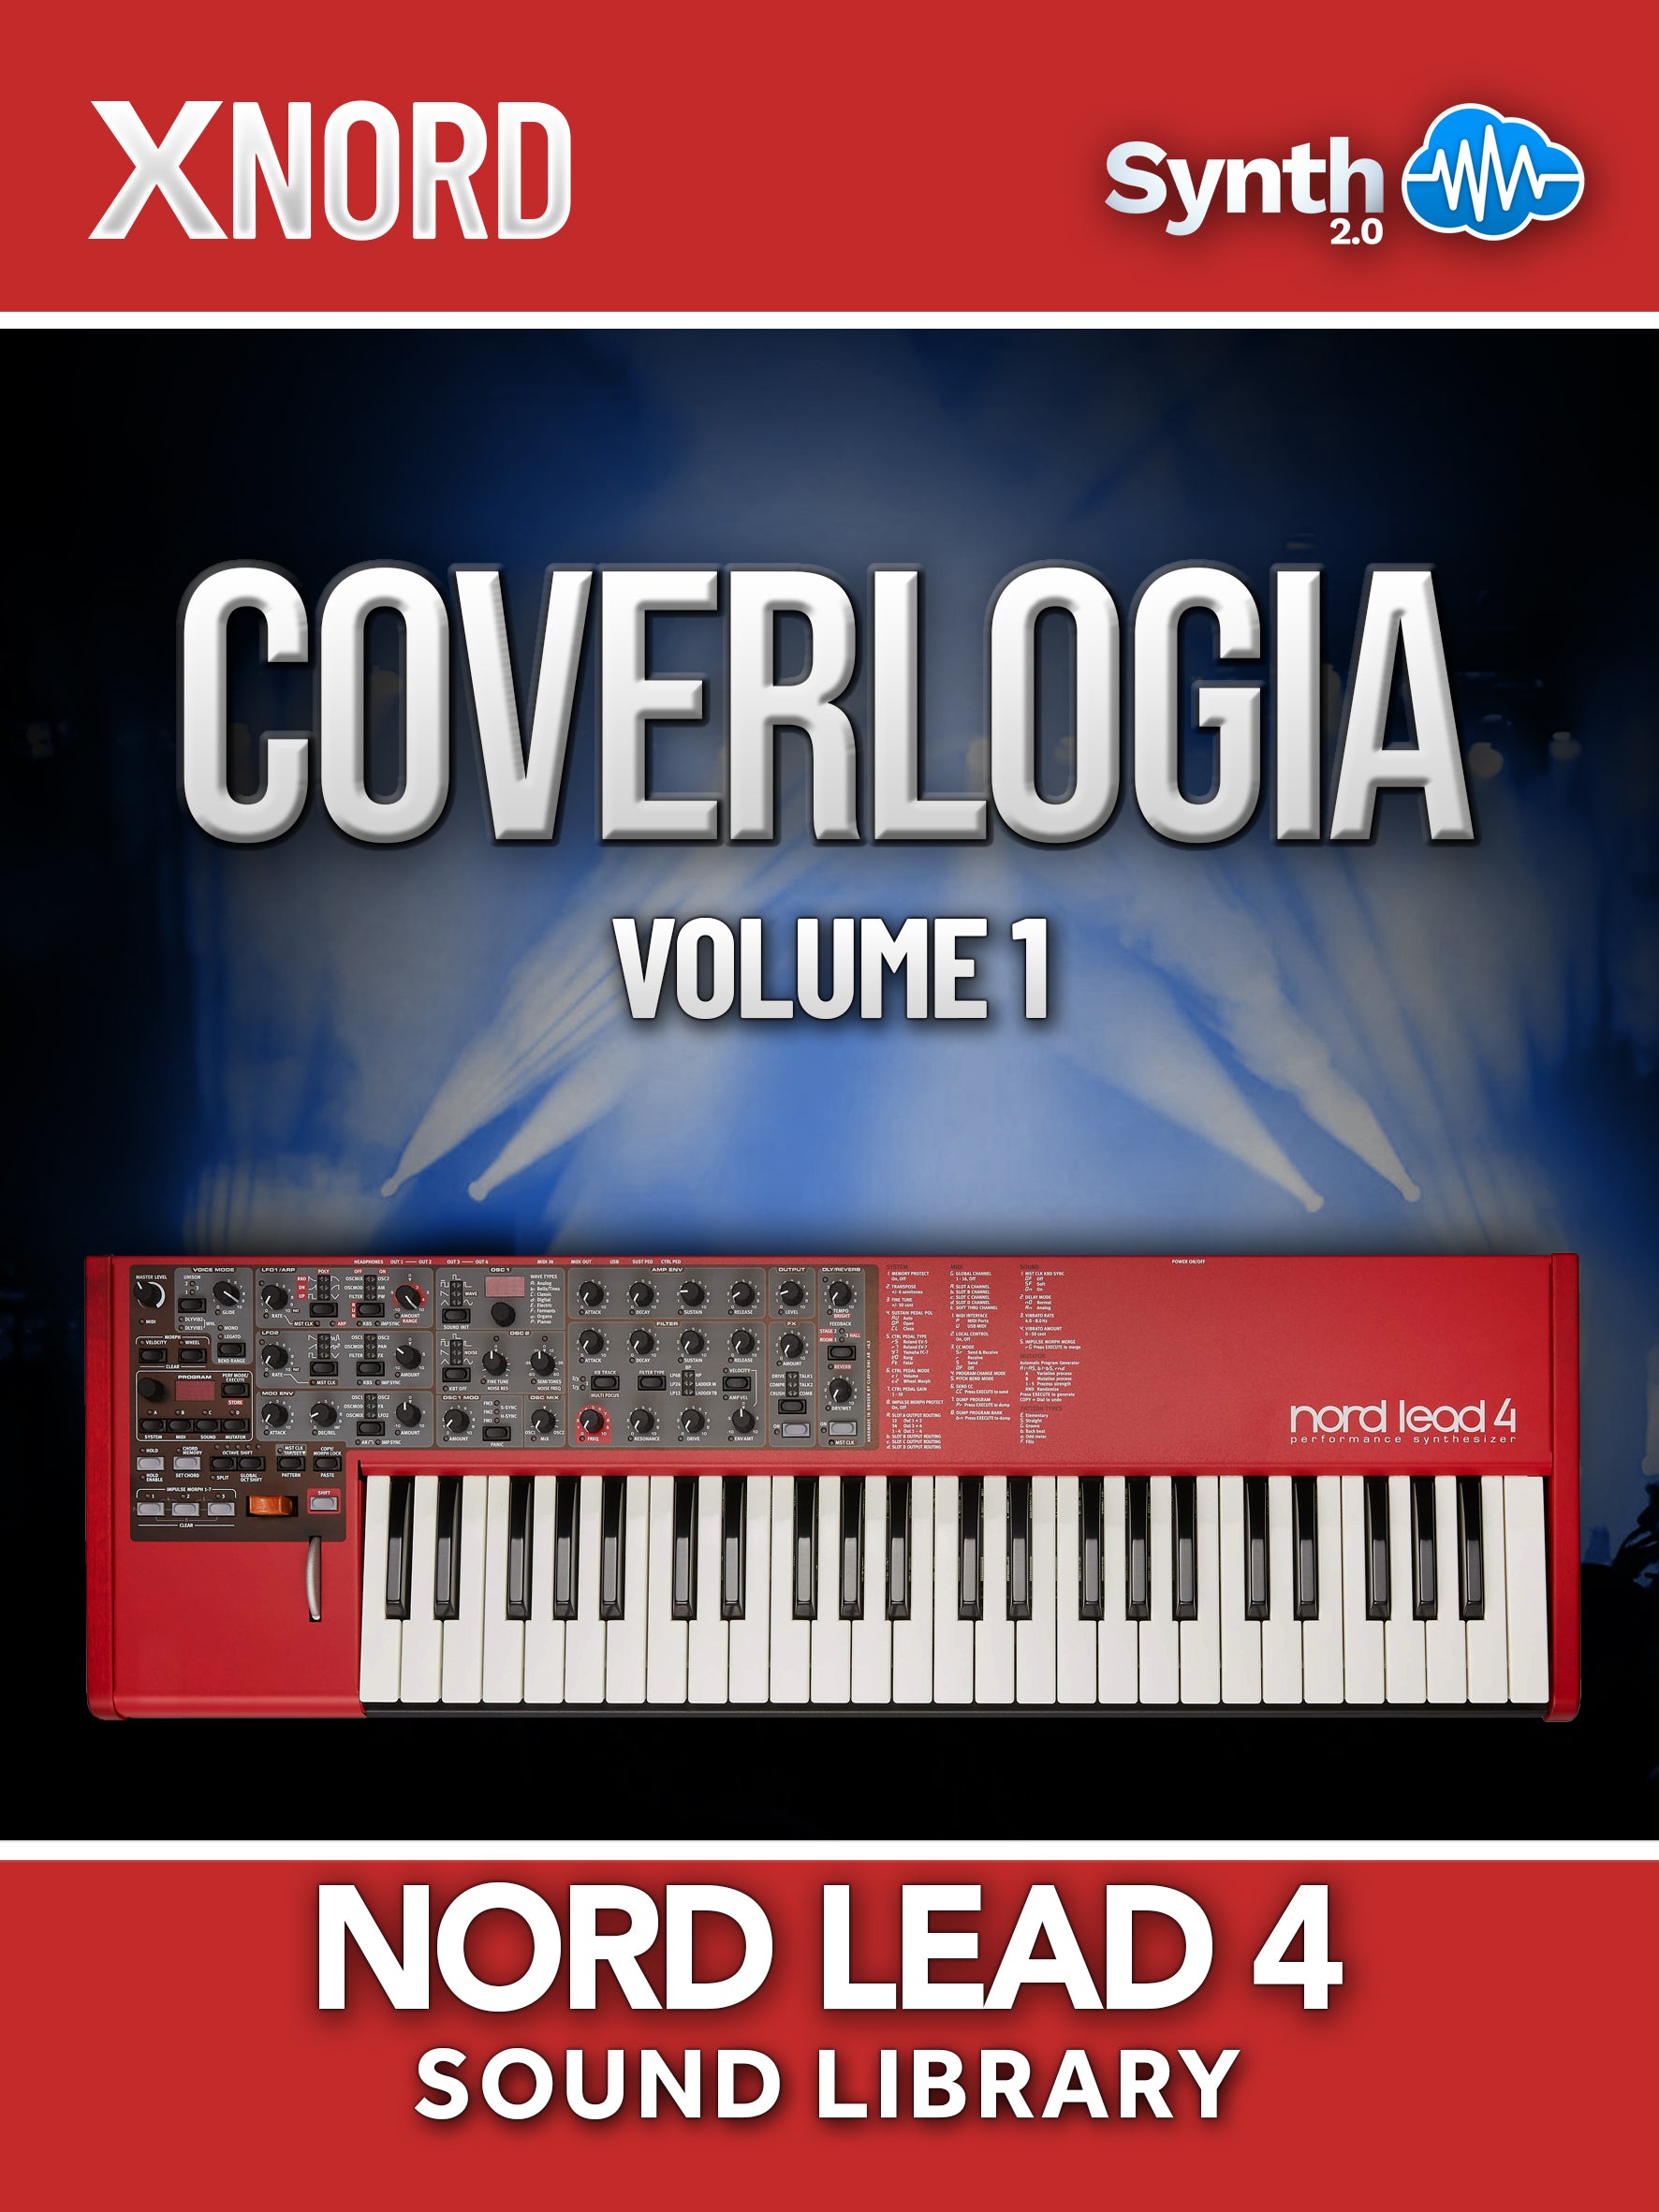 FPL029 - ( Bundle ) - Coverlogia Vol.1 + The Floydian Wall Vol.1 - Nord Lead 4 / Rack